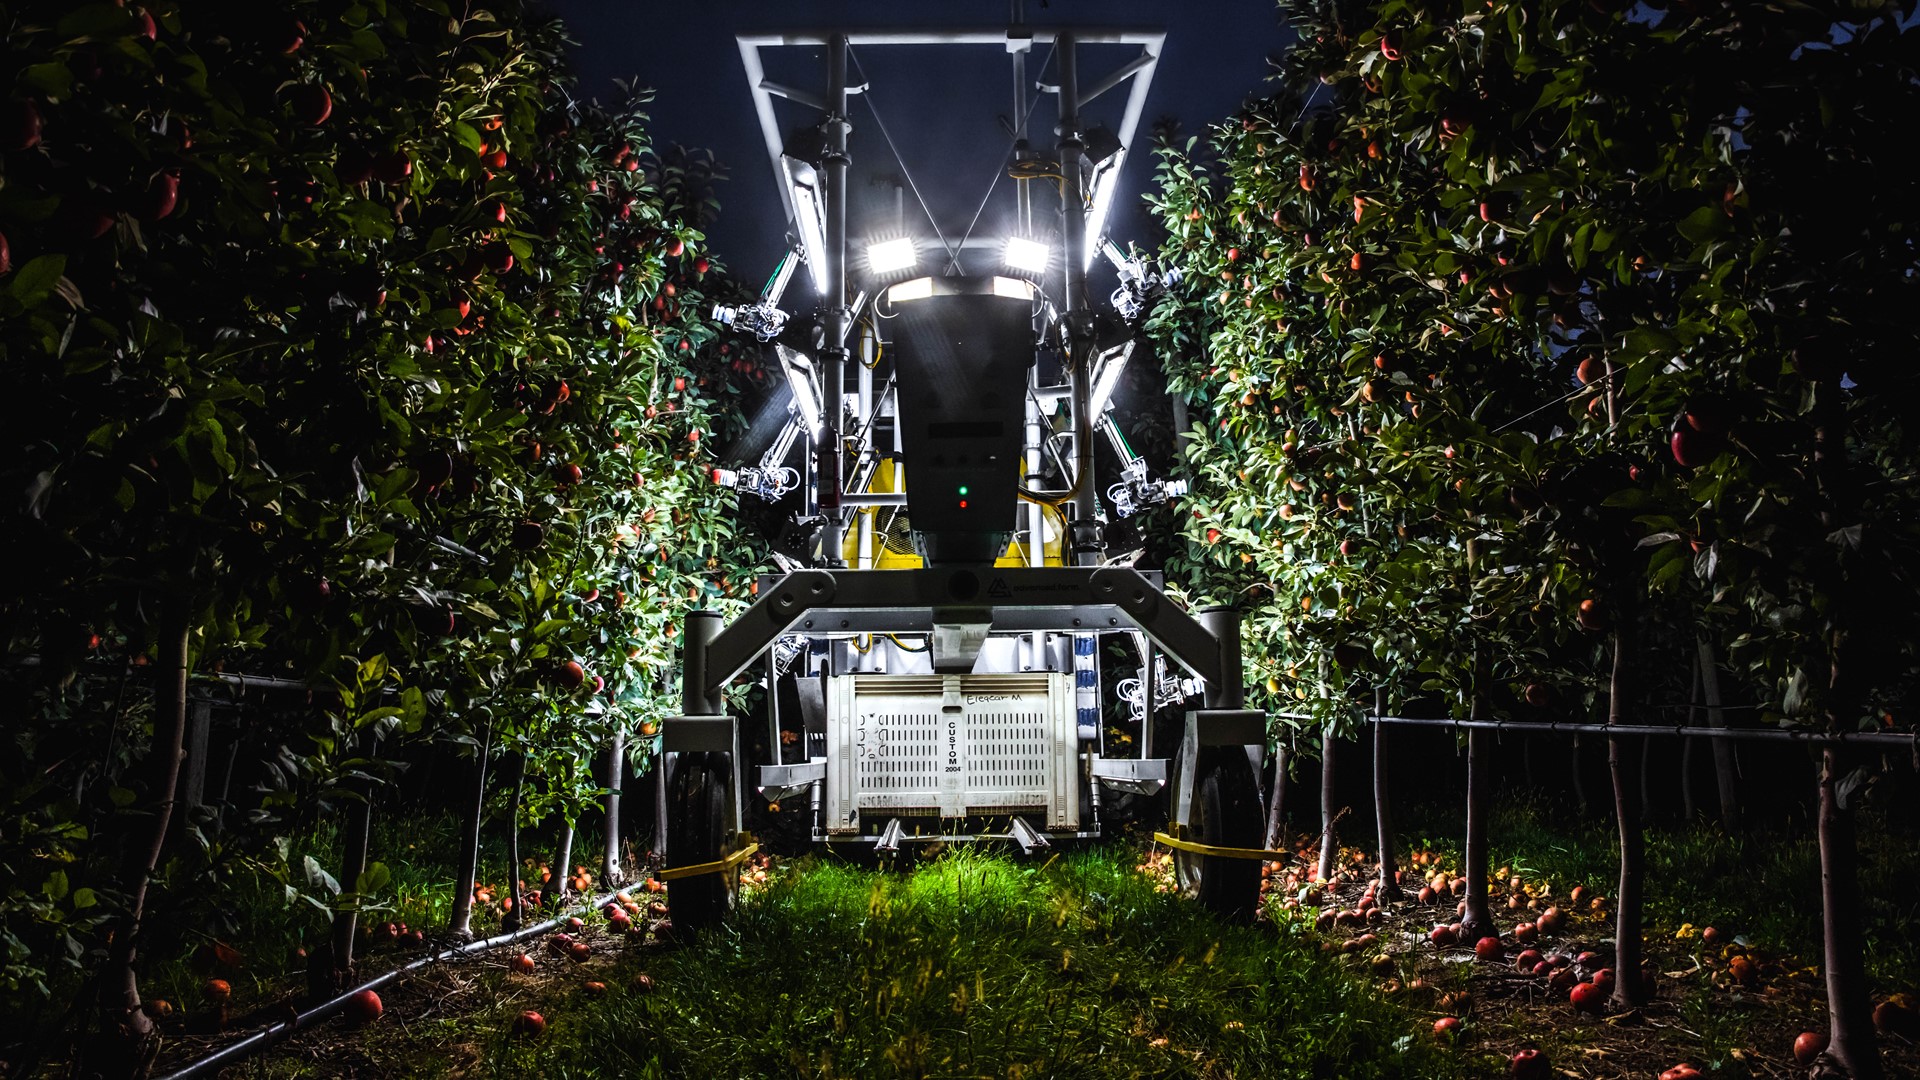 The advanced farm BetterPick robotic harvester picks fruit at night